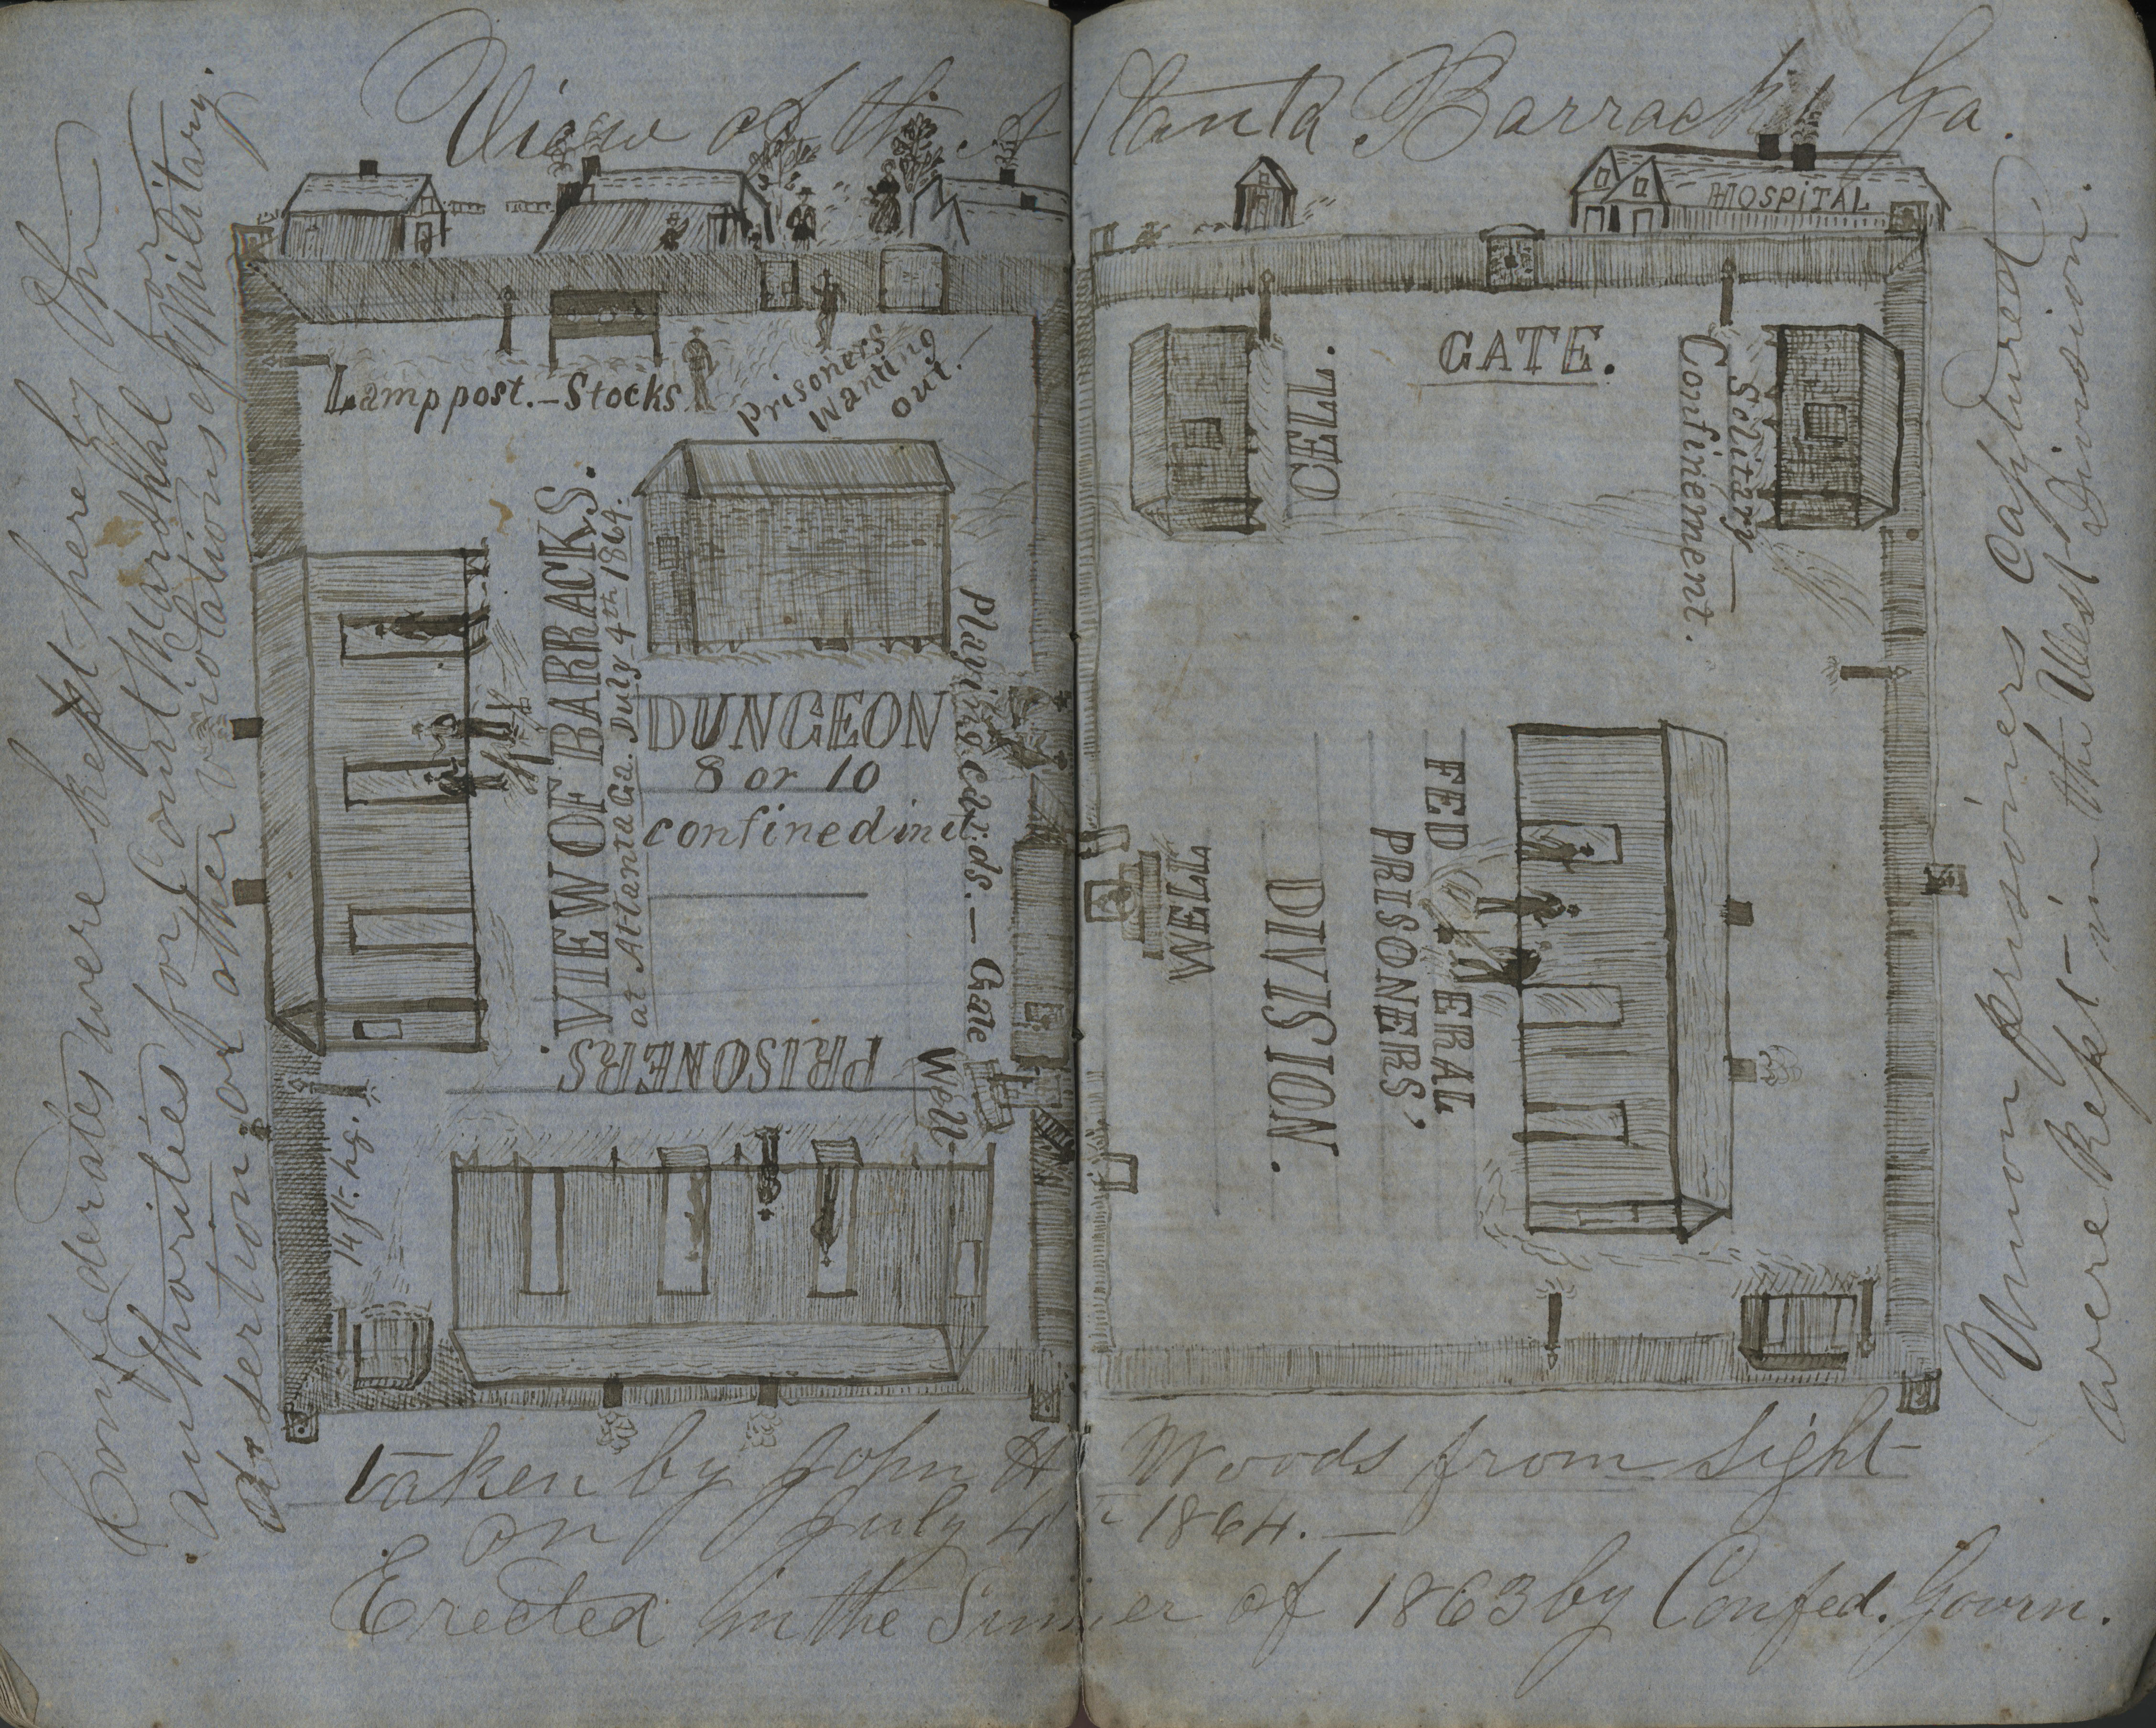 Woods' drawing of the Atlanta Prison Barracks